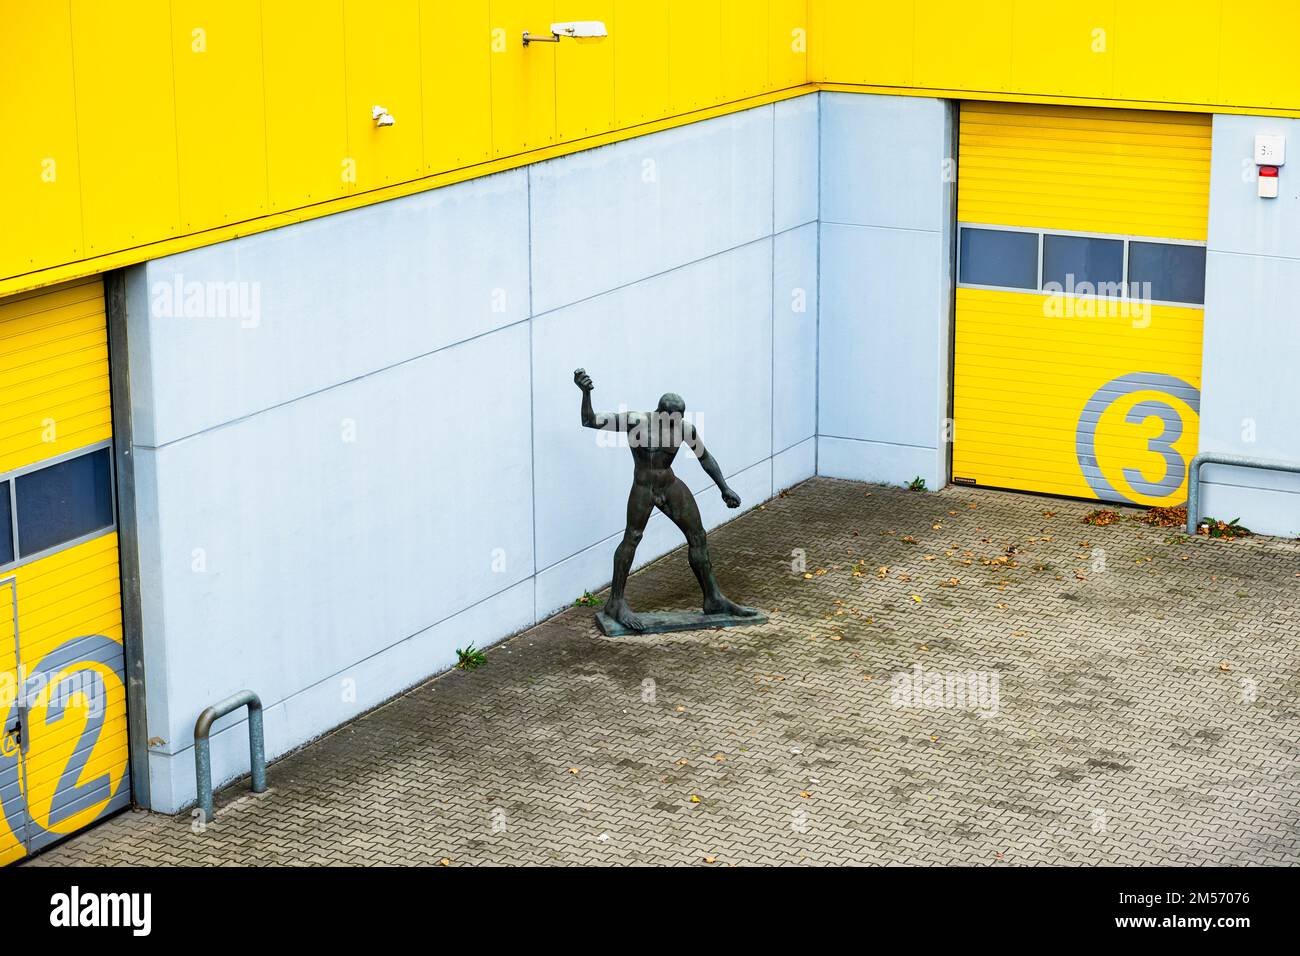 Bronze sculpture at Industrial park, Berlin, Germany Stock Photo